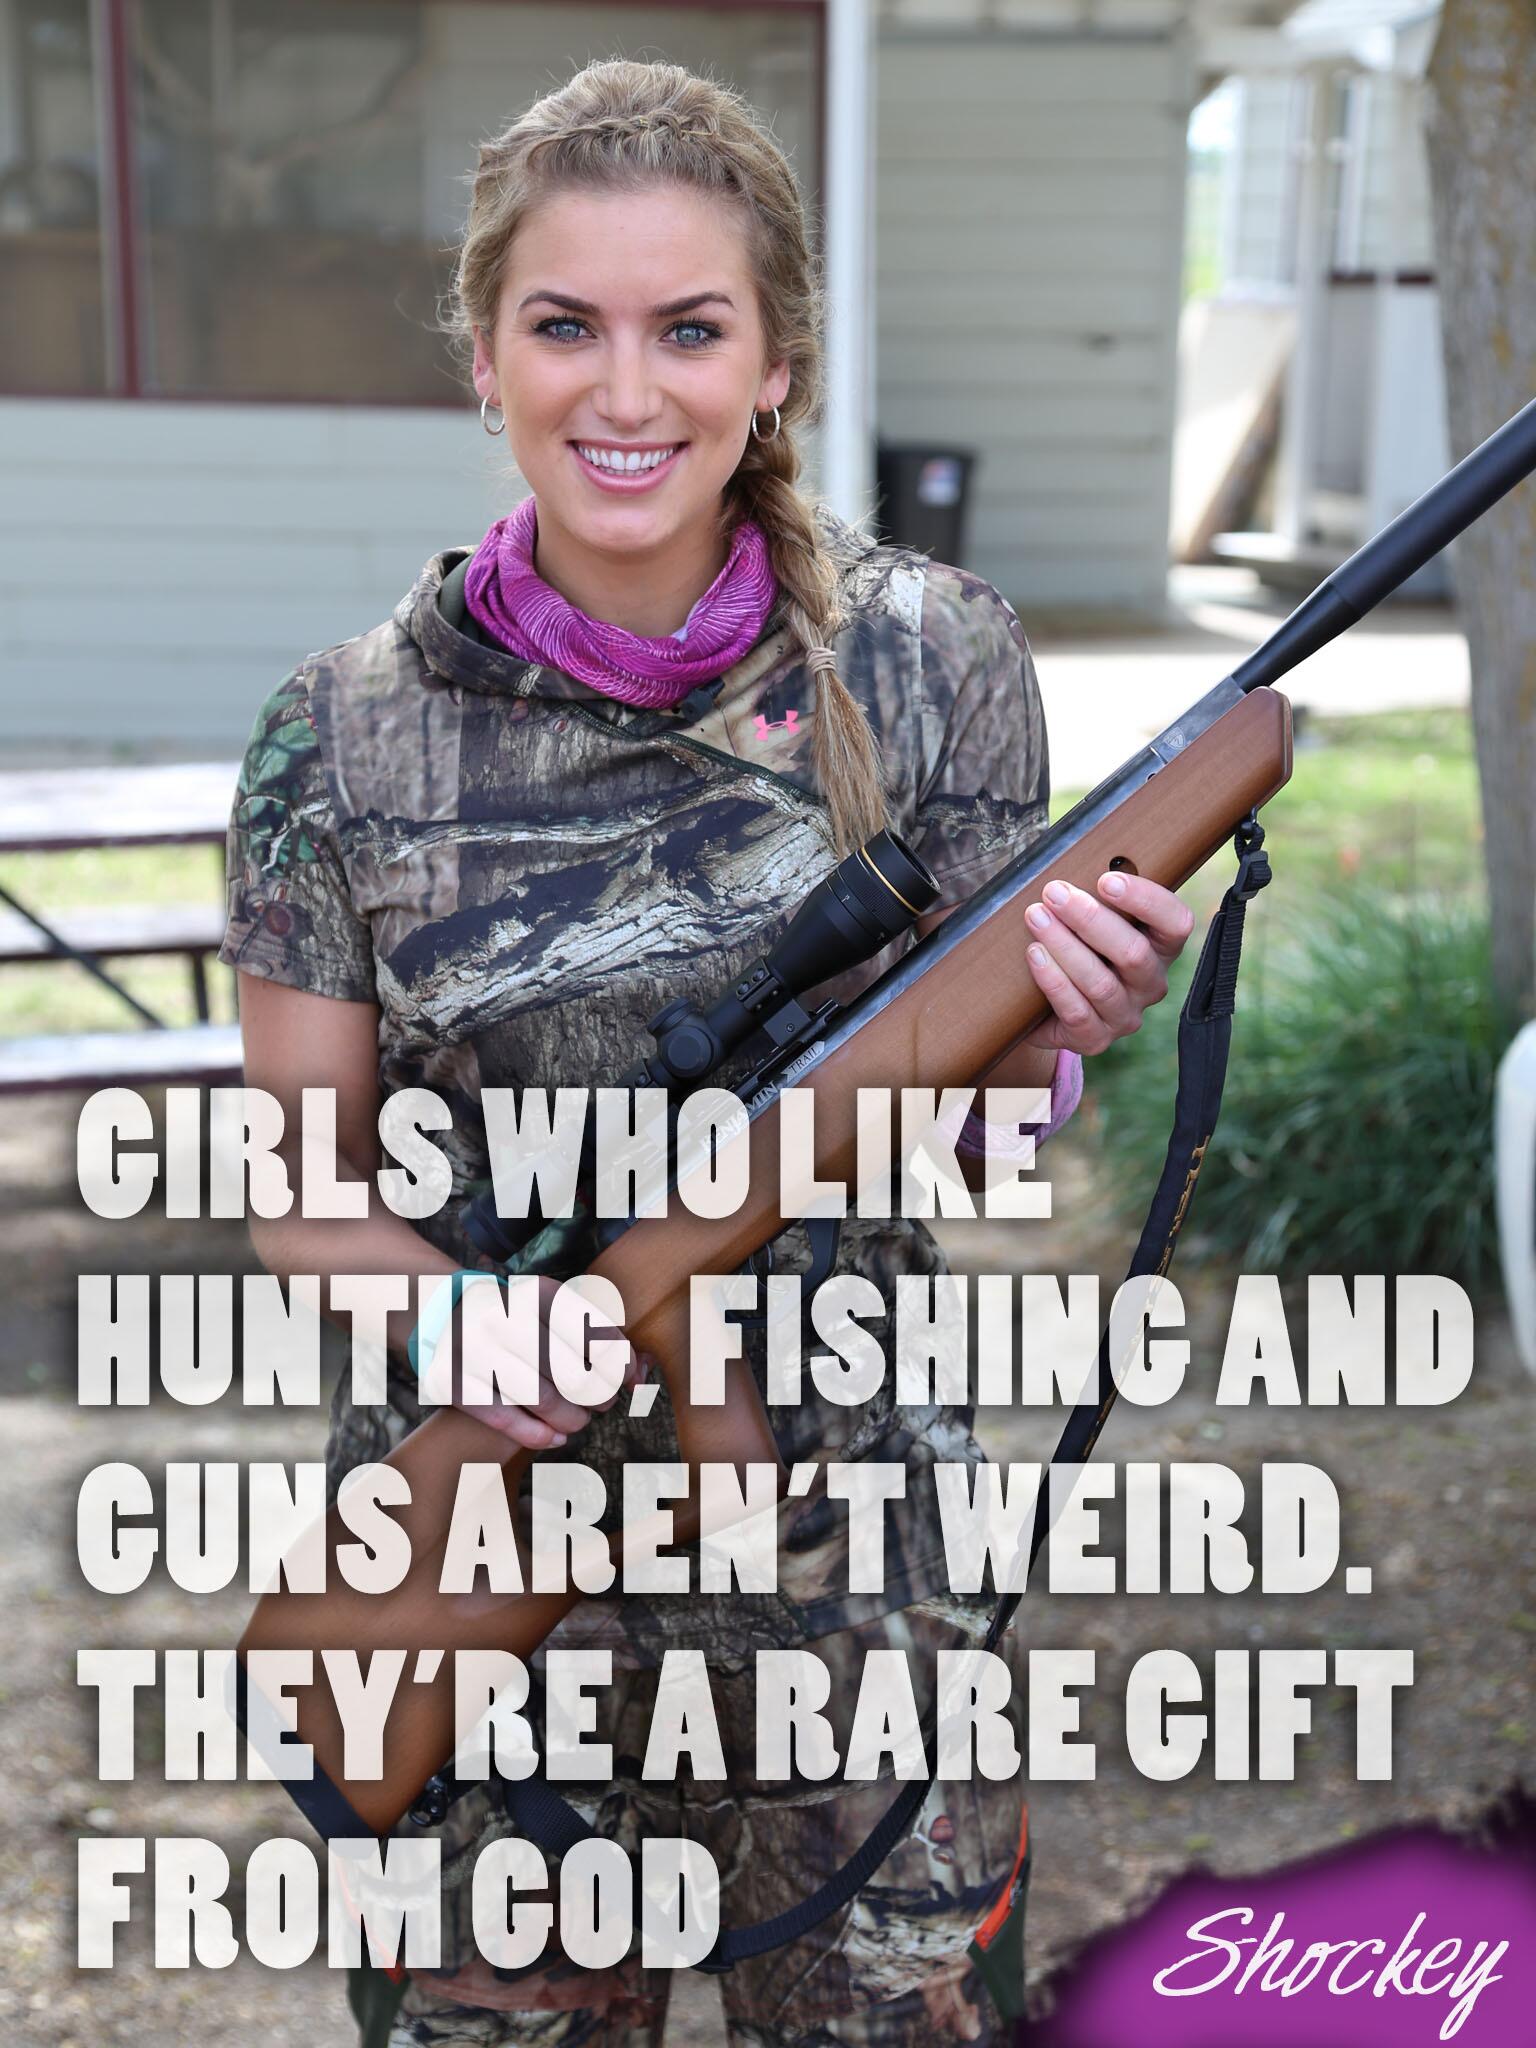 Eva Shockey Brent on X: Girls who like hunting, fishing and guns